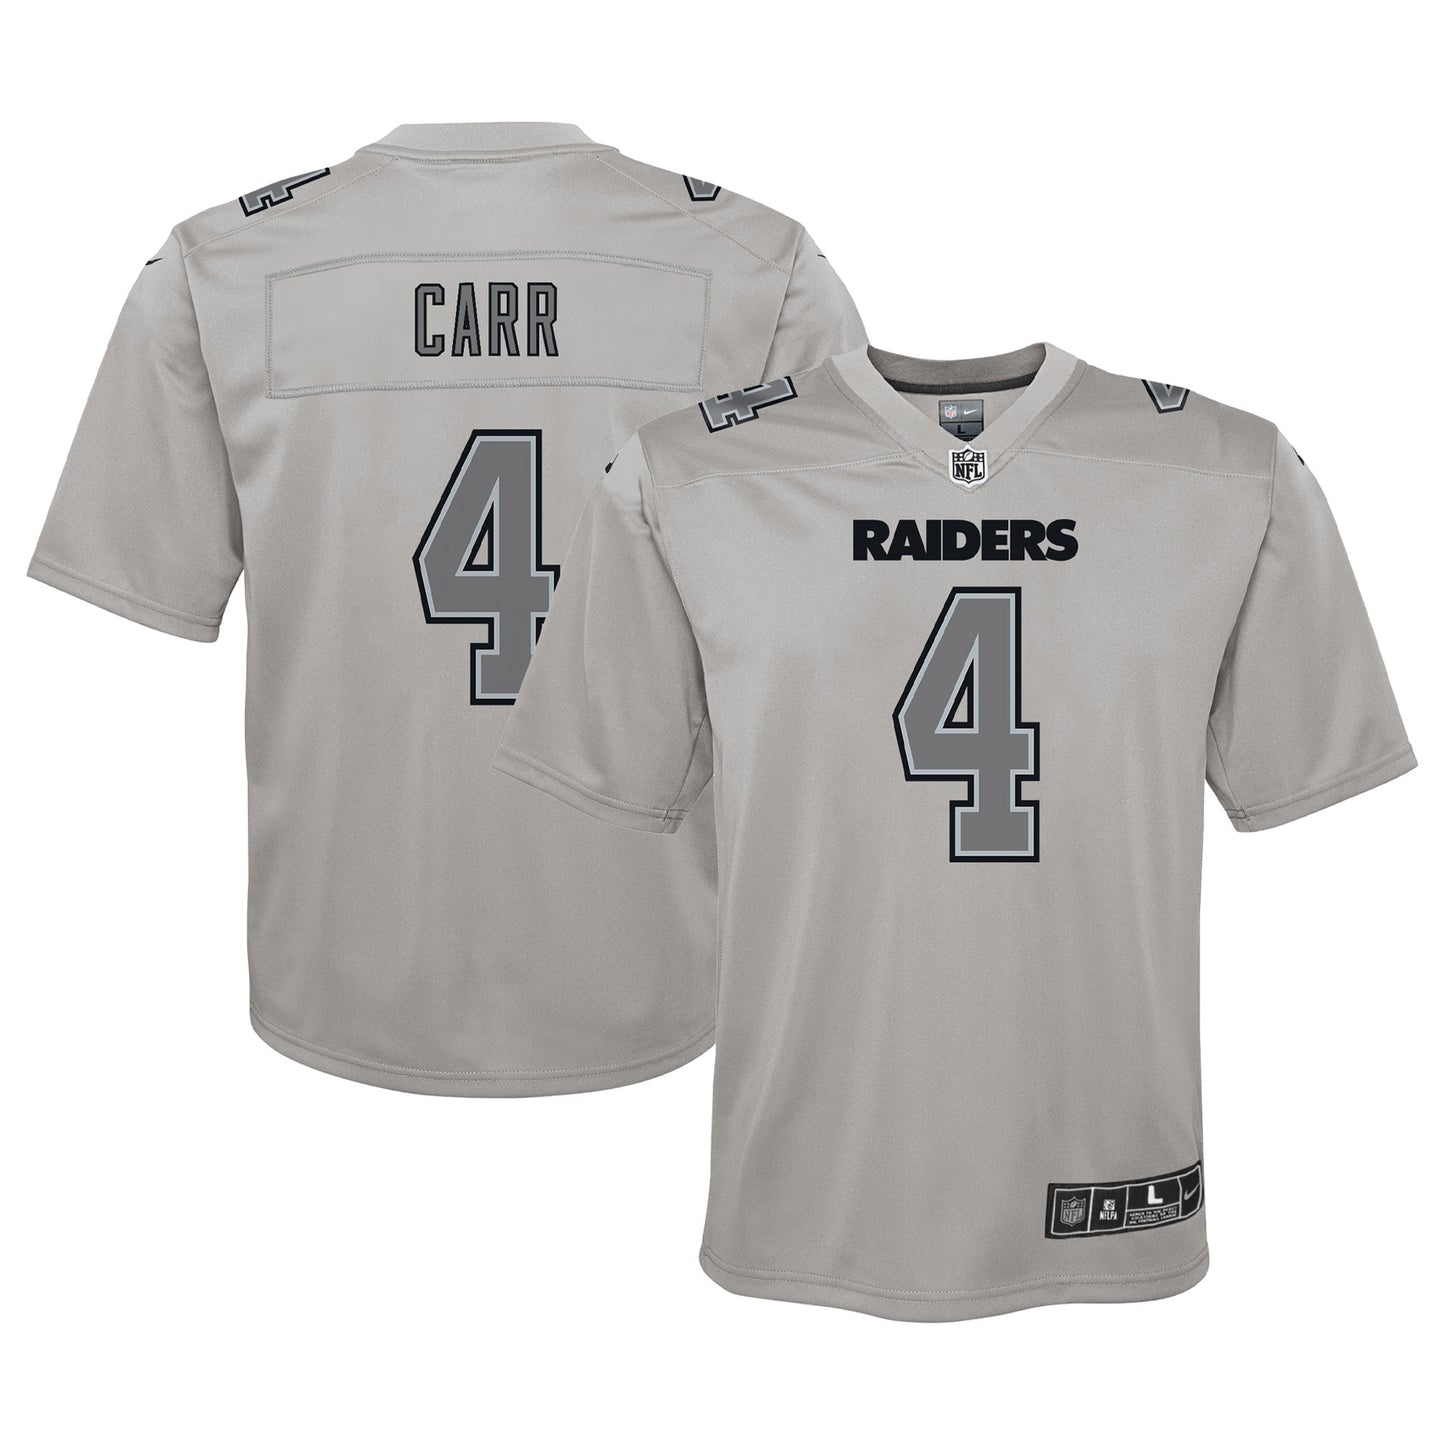 Derek Carr Las Vegas Raiders Nike Youth Atmosphere Game Jersey - Gray